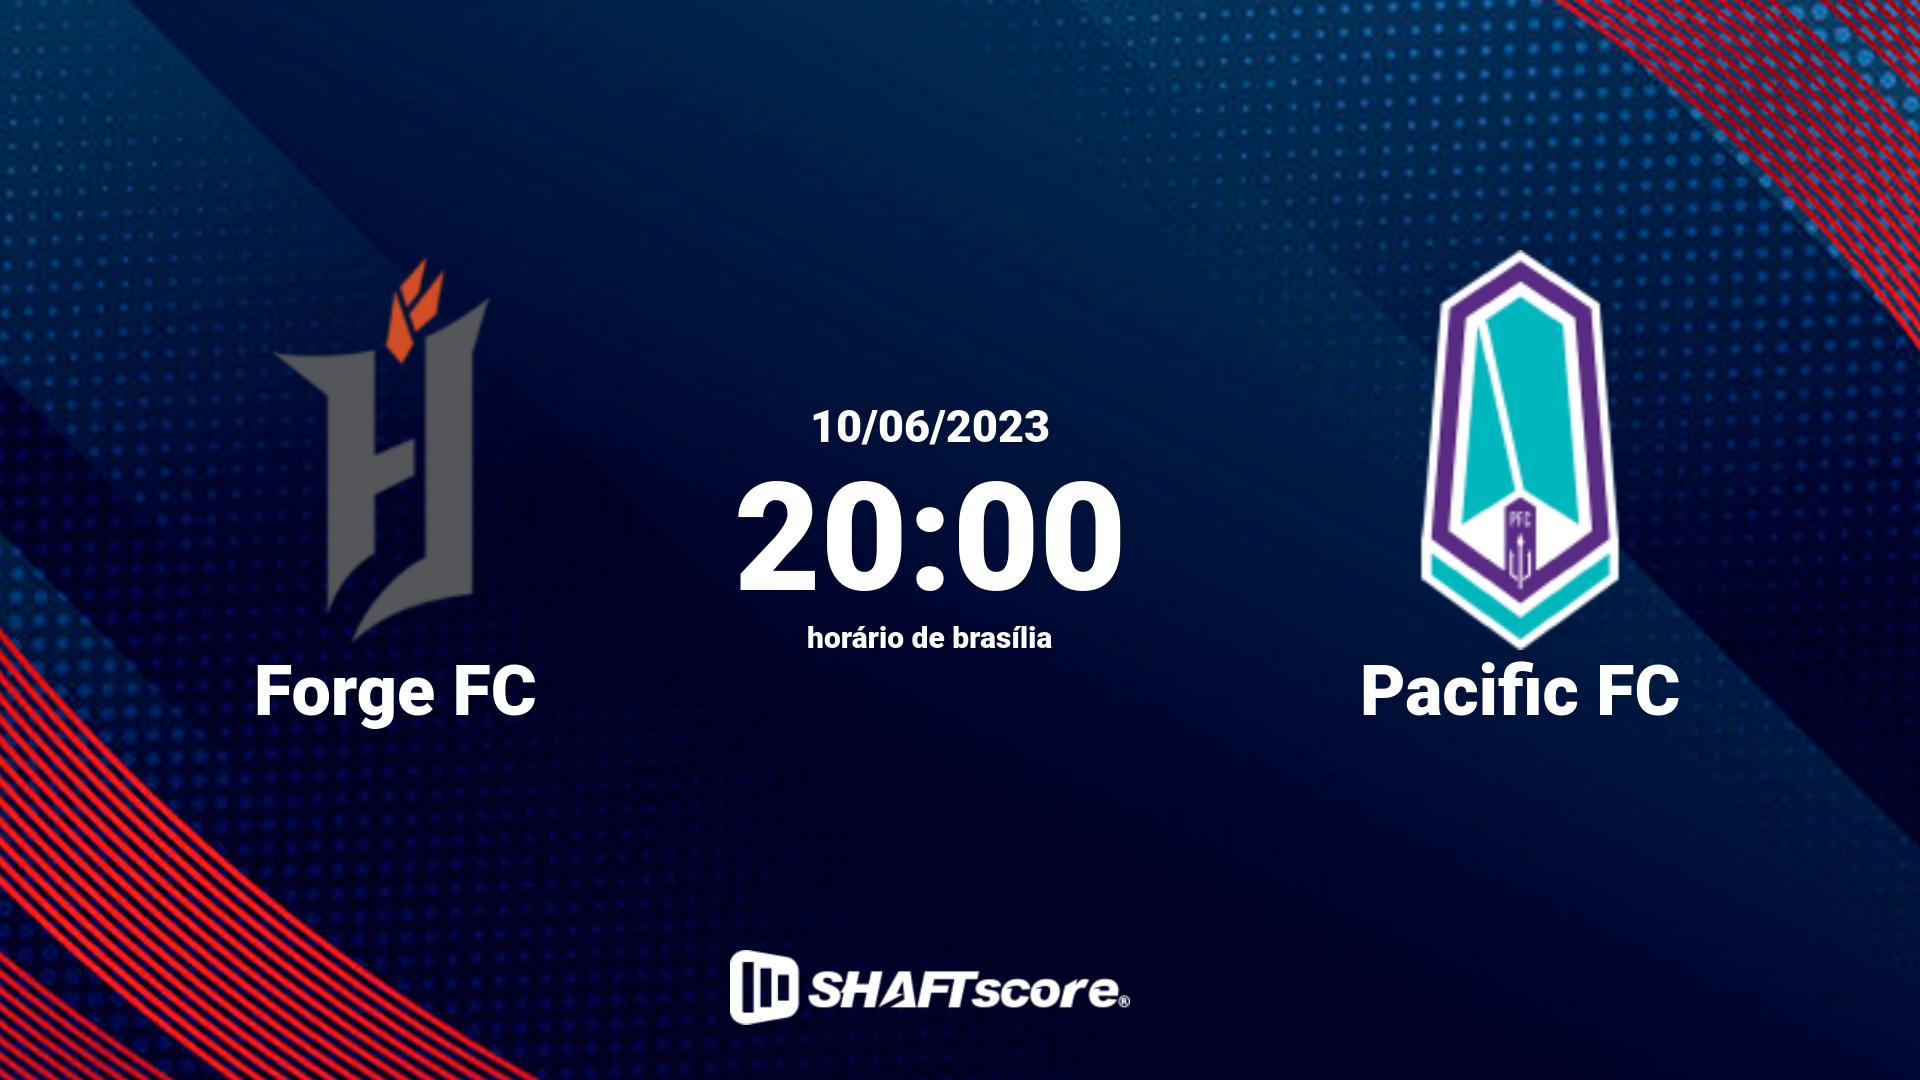 Estatísticas do jogo Forge FC vs Pacific FC 10.06 20:00